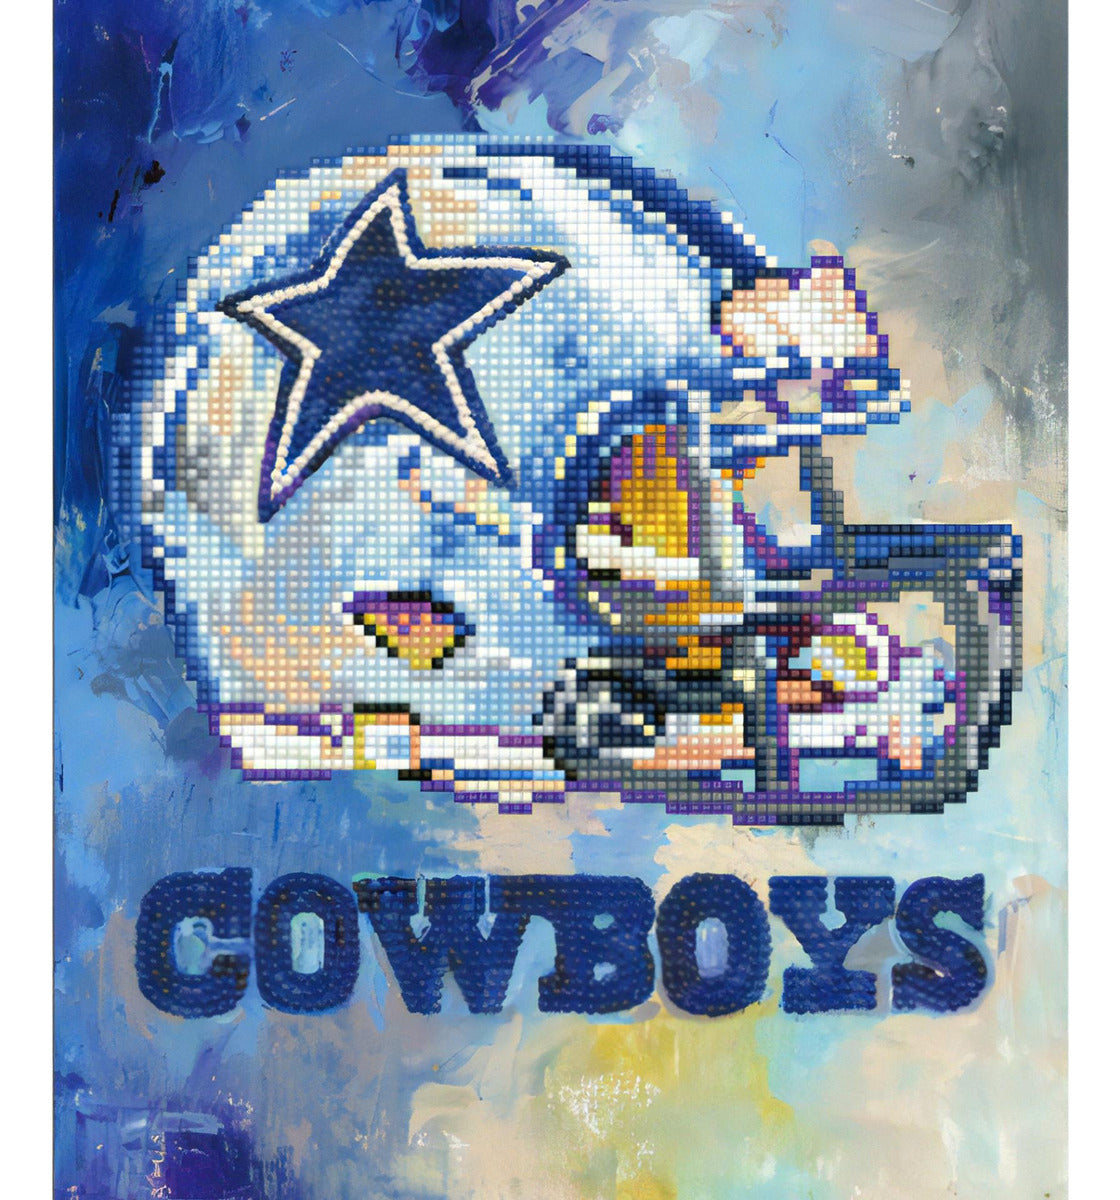 Set De Artesania Diamond Painting Nfl Dallas Cowboys